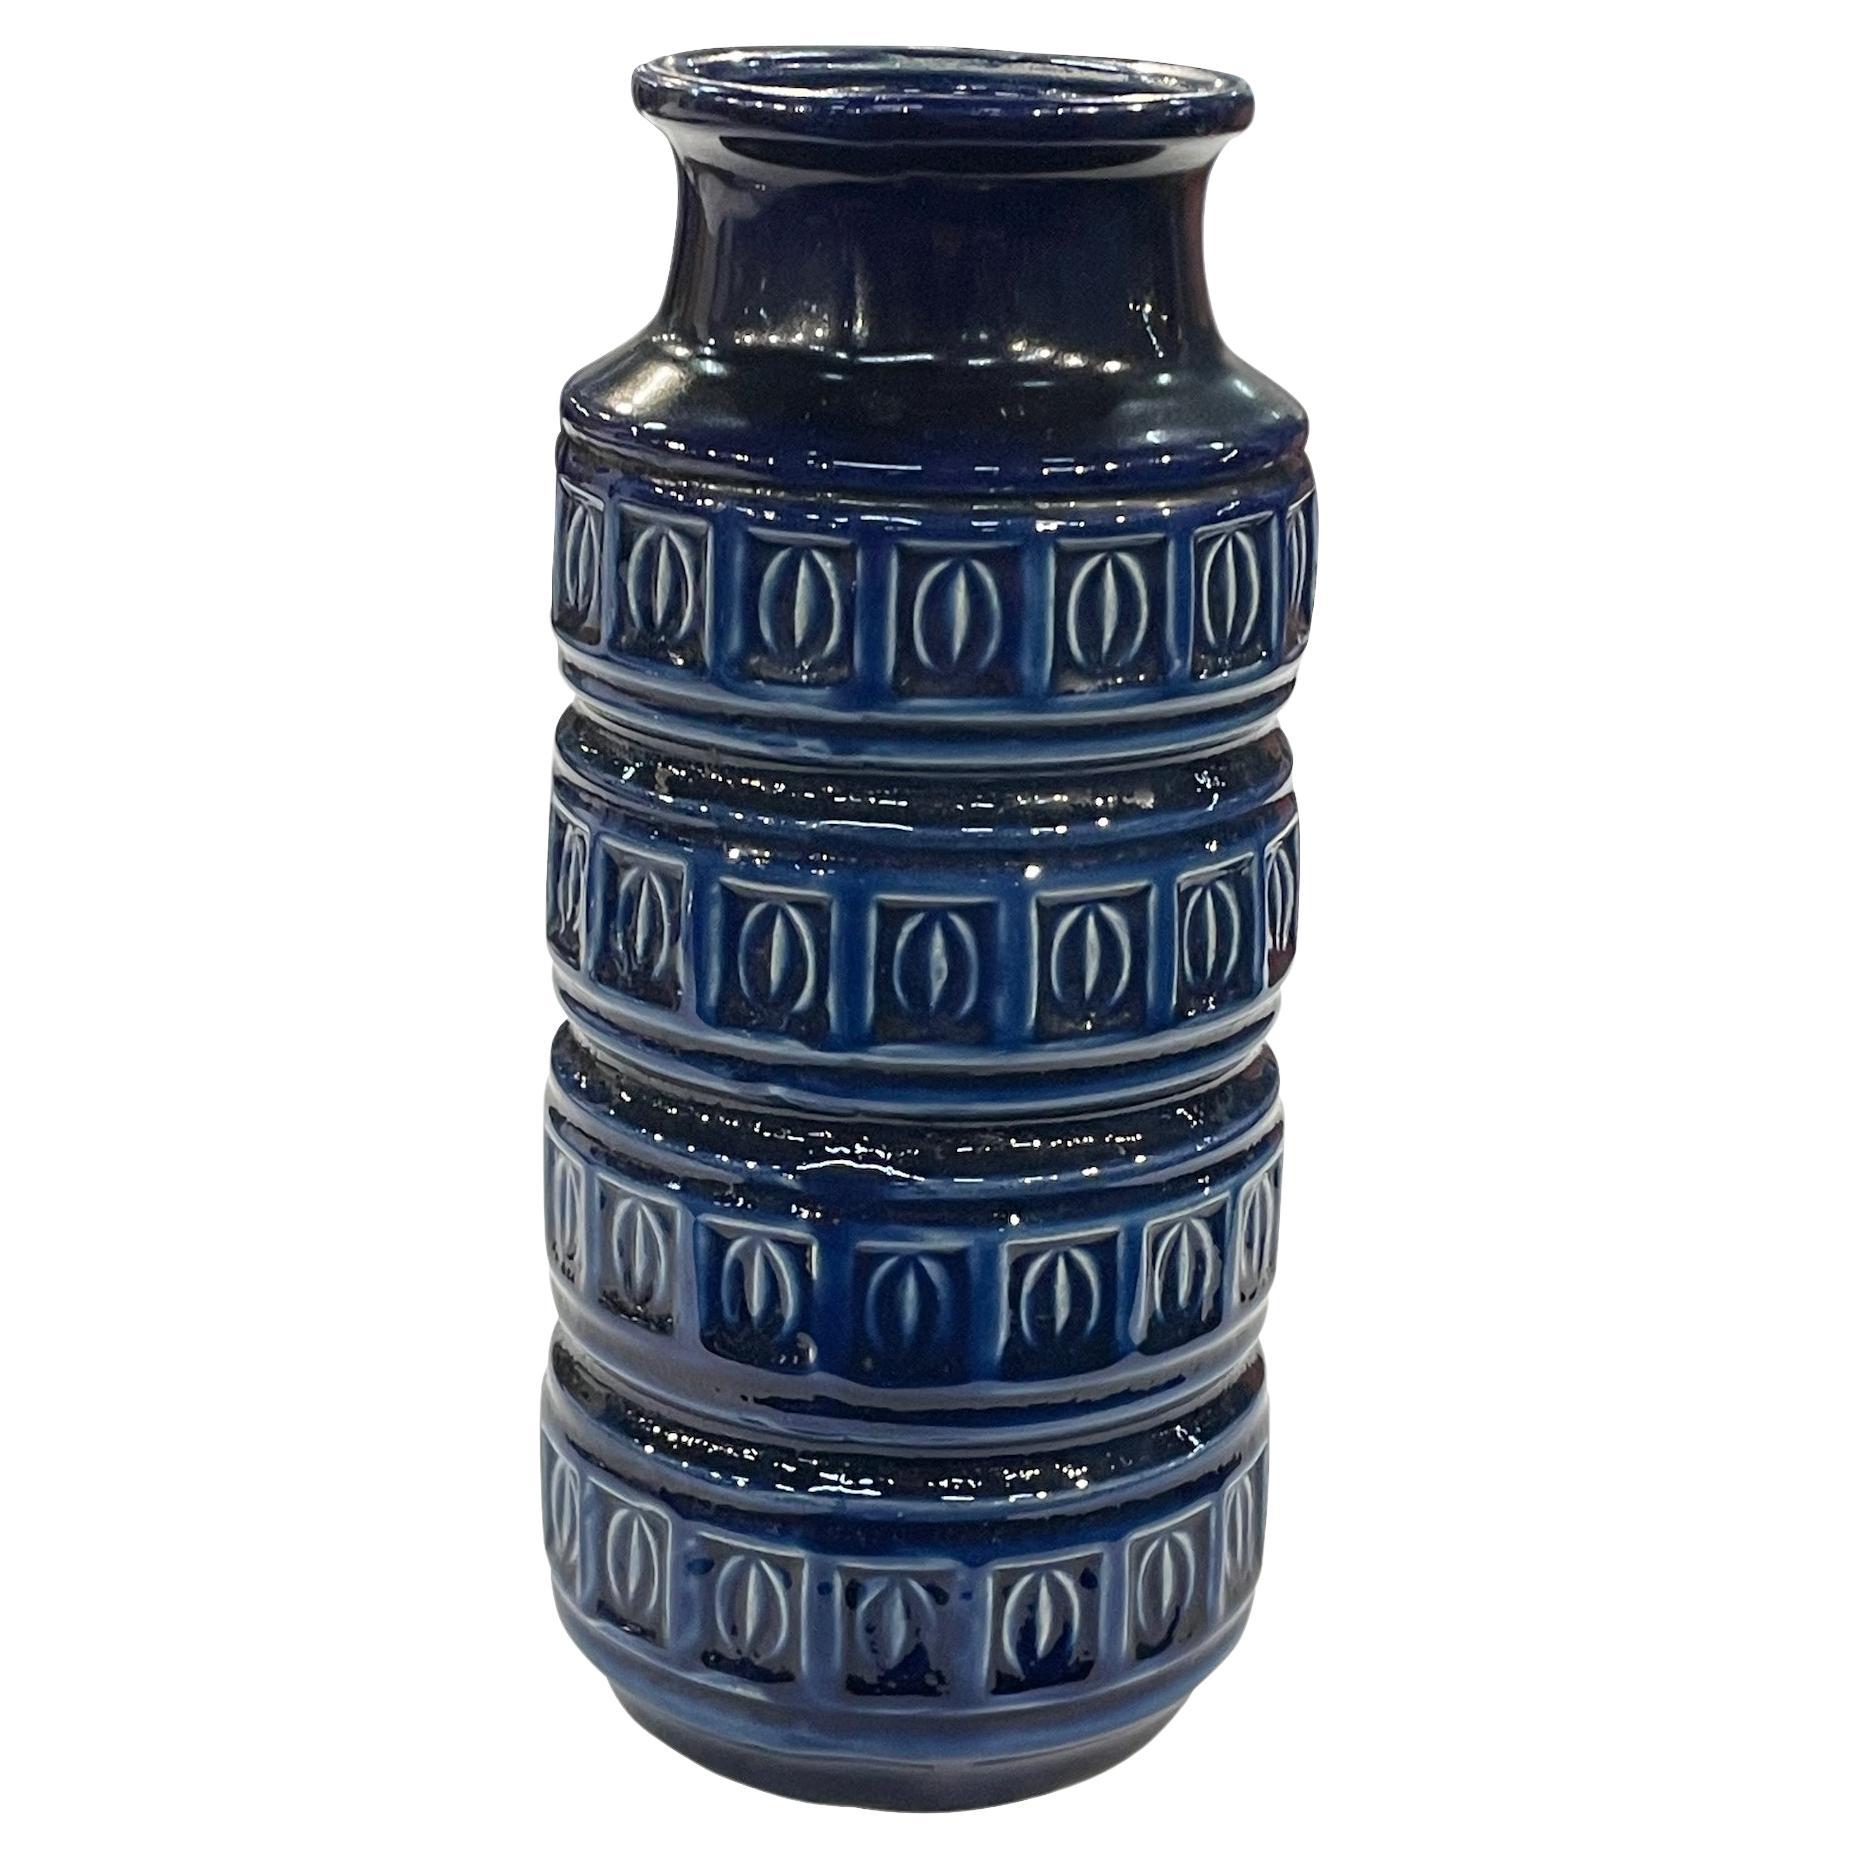 Cobalt Blue With Raised Geometric Design Bands Vase, Germany, Mid Century